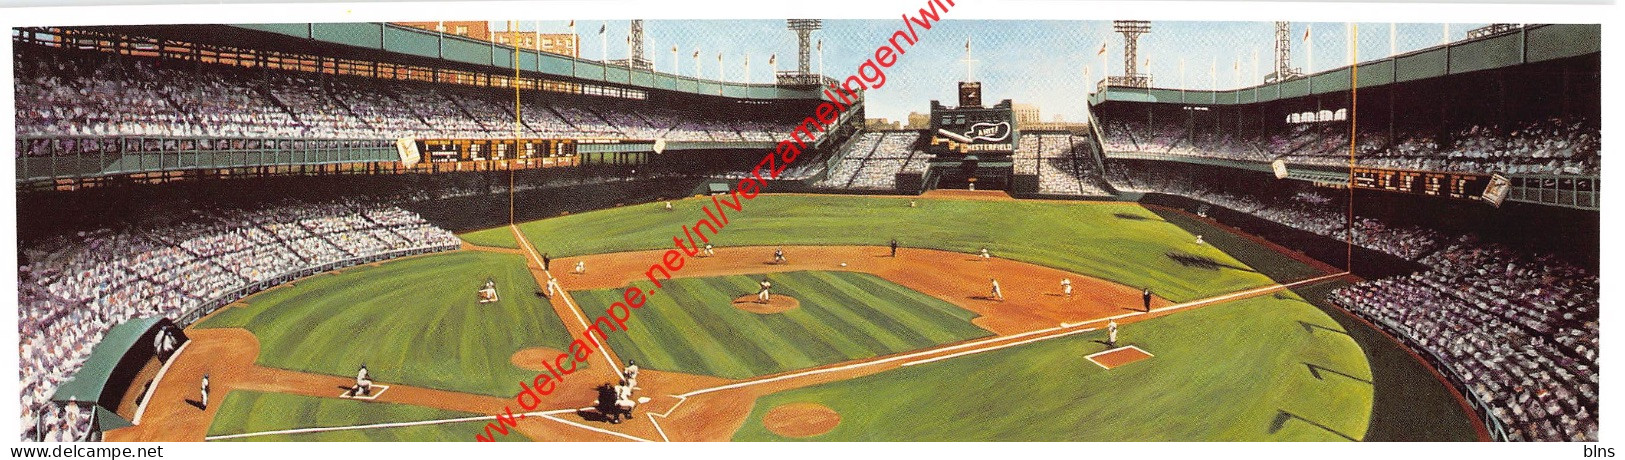 Polo Grounds Matinee By Andy Jurinko - Baseball - 23x7cm - Baseball